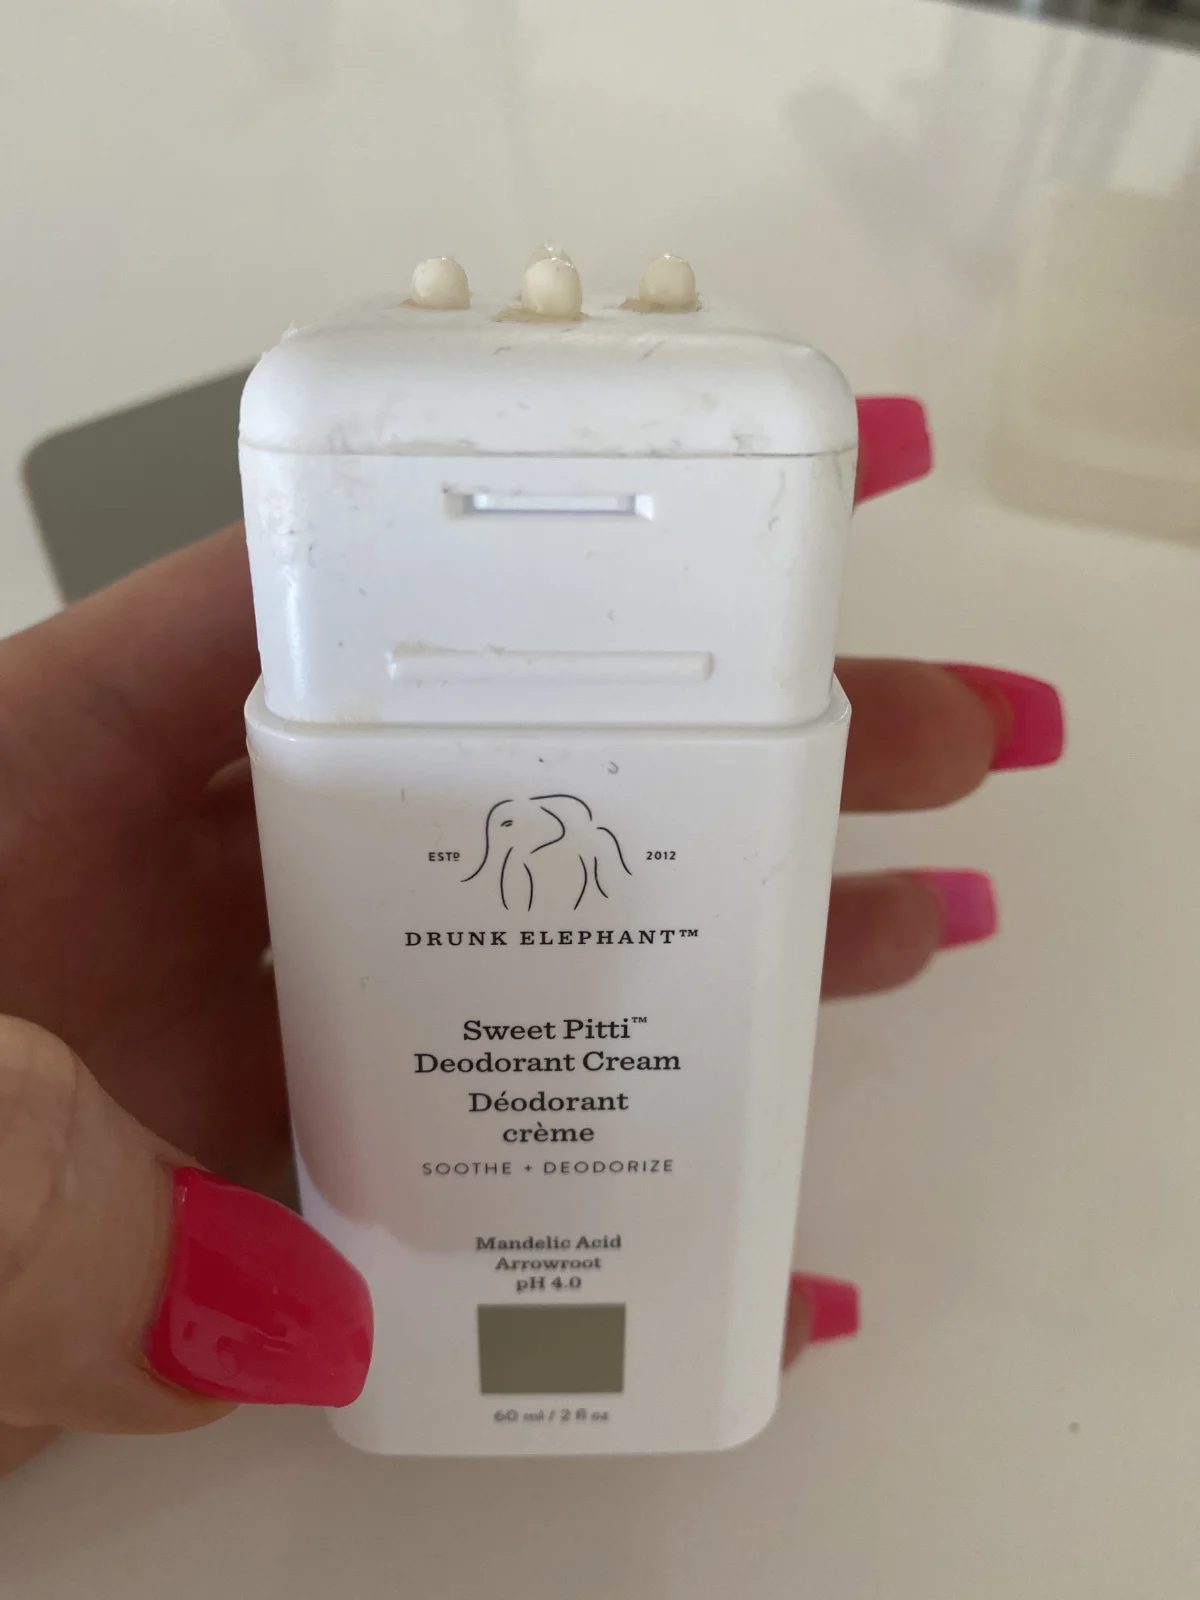 Sweet Pitti(TM) Deodorant Cream - review image